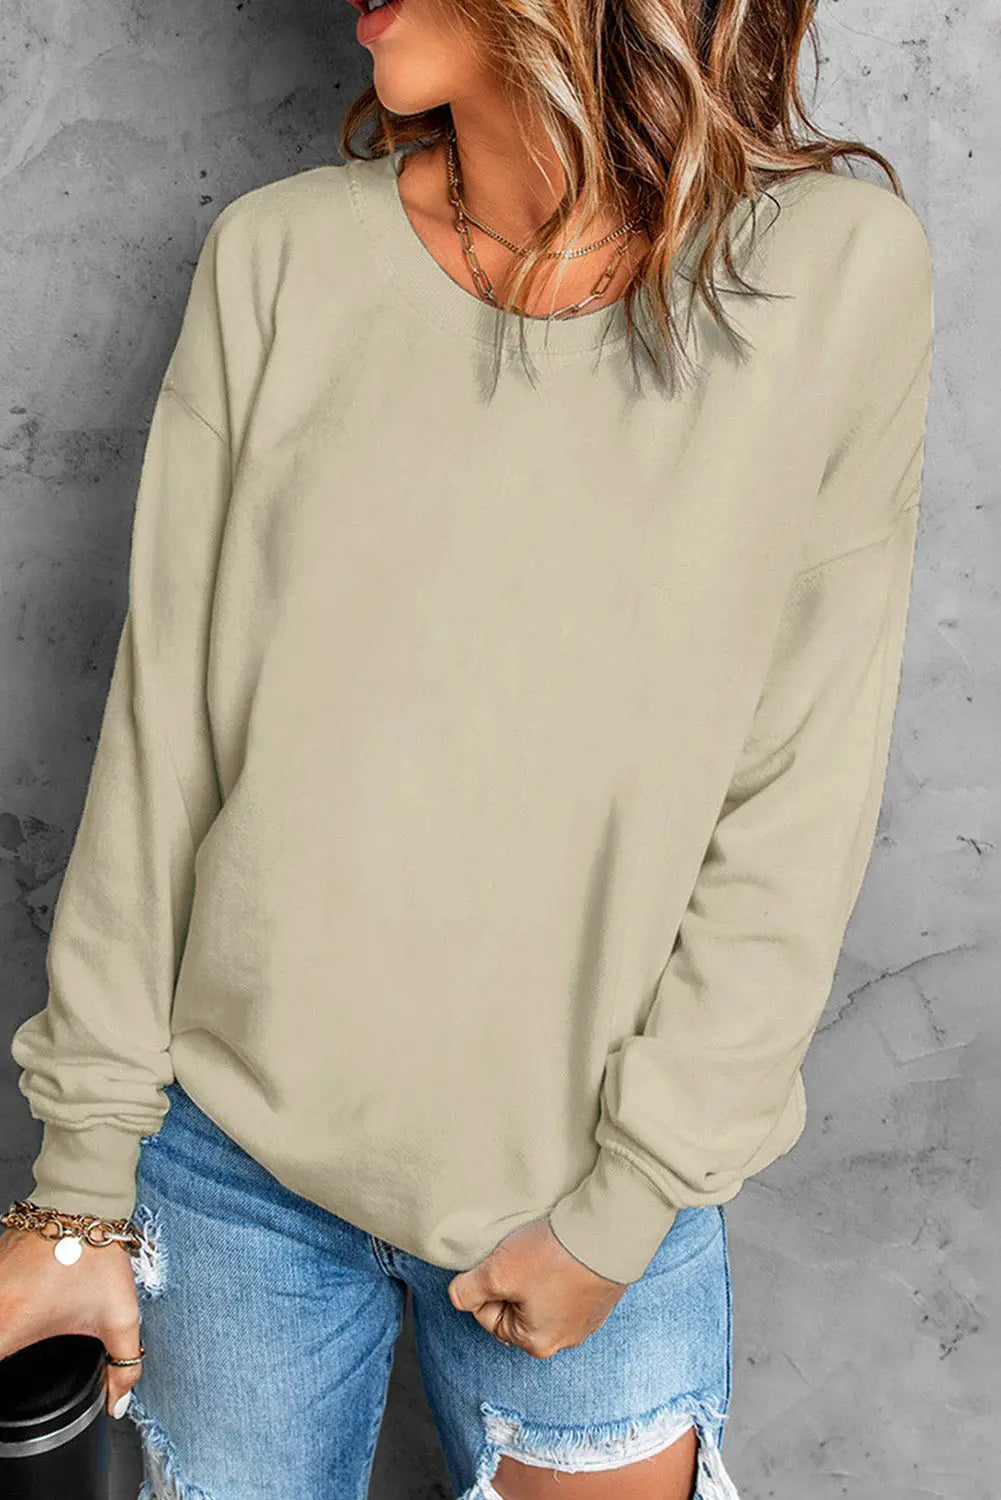 Orange plain crew neck pullover sweatshirt - khaki / s / 70% polyester + 30% cotton - tops